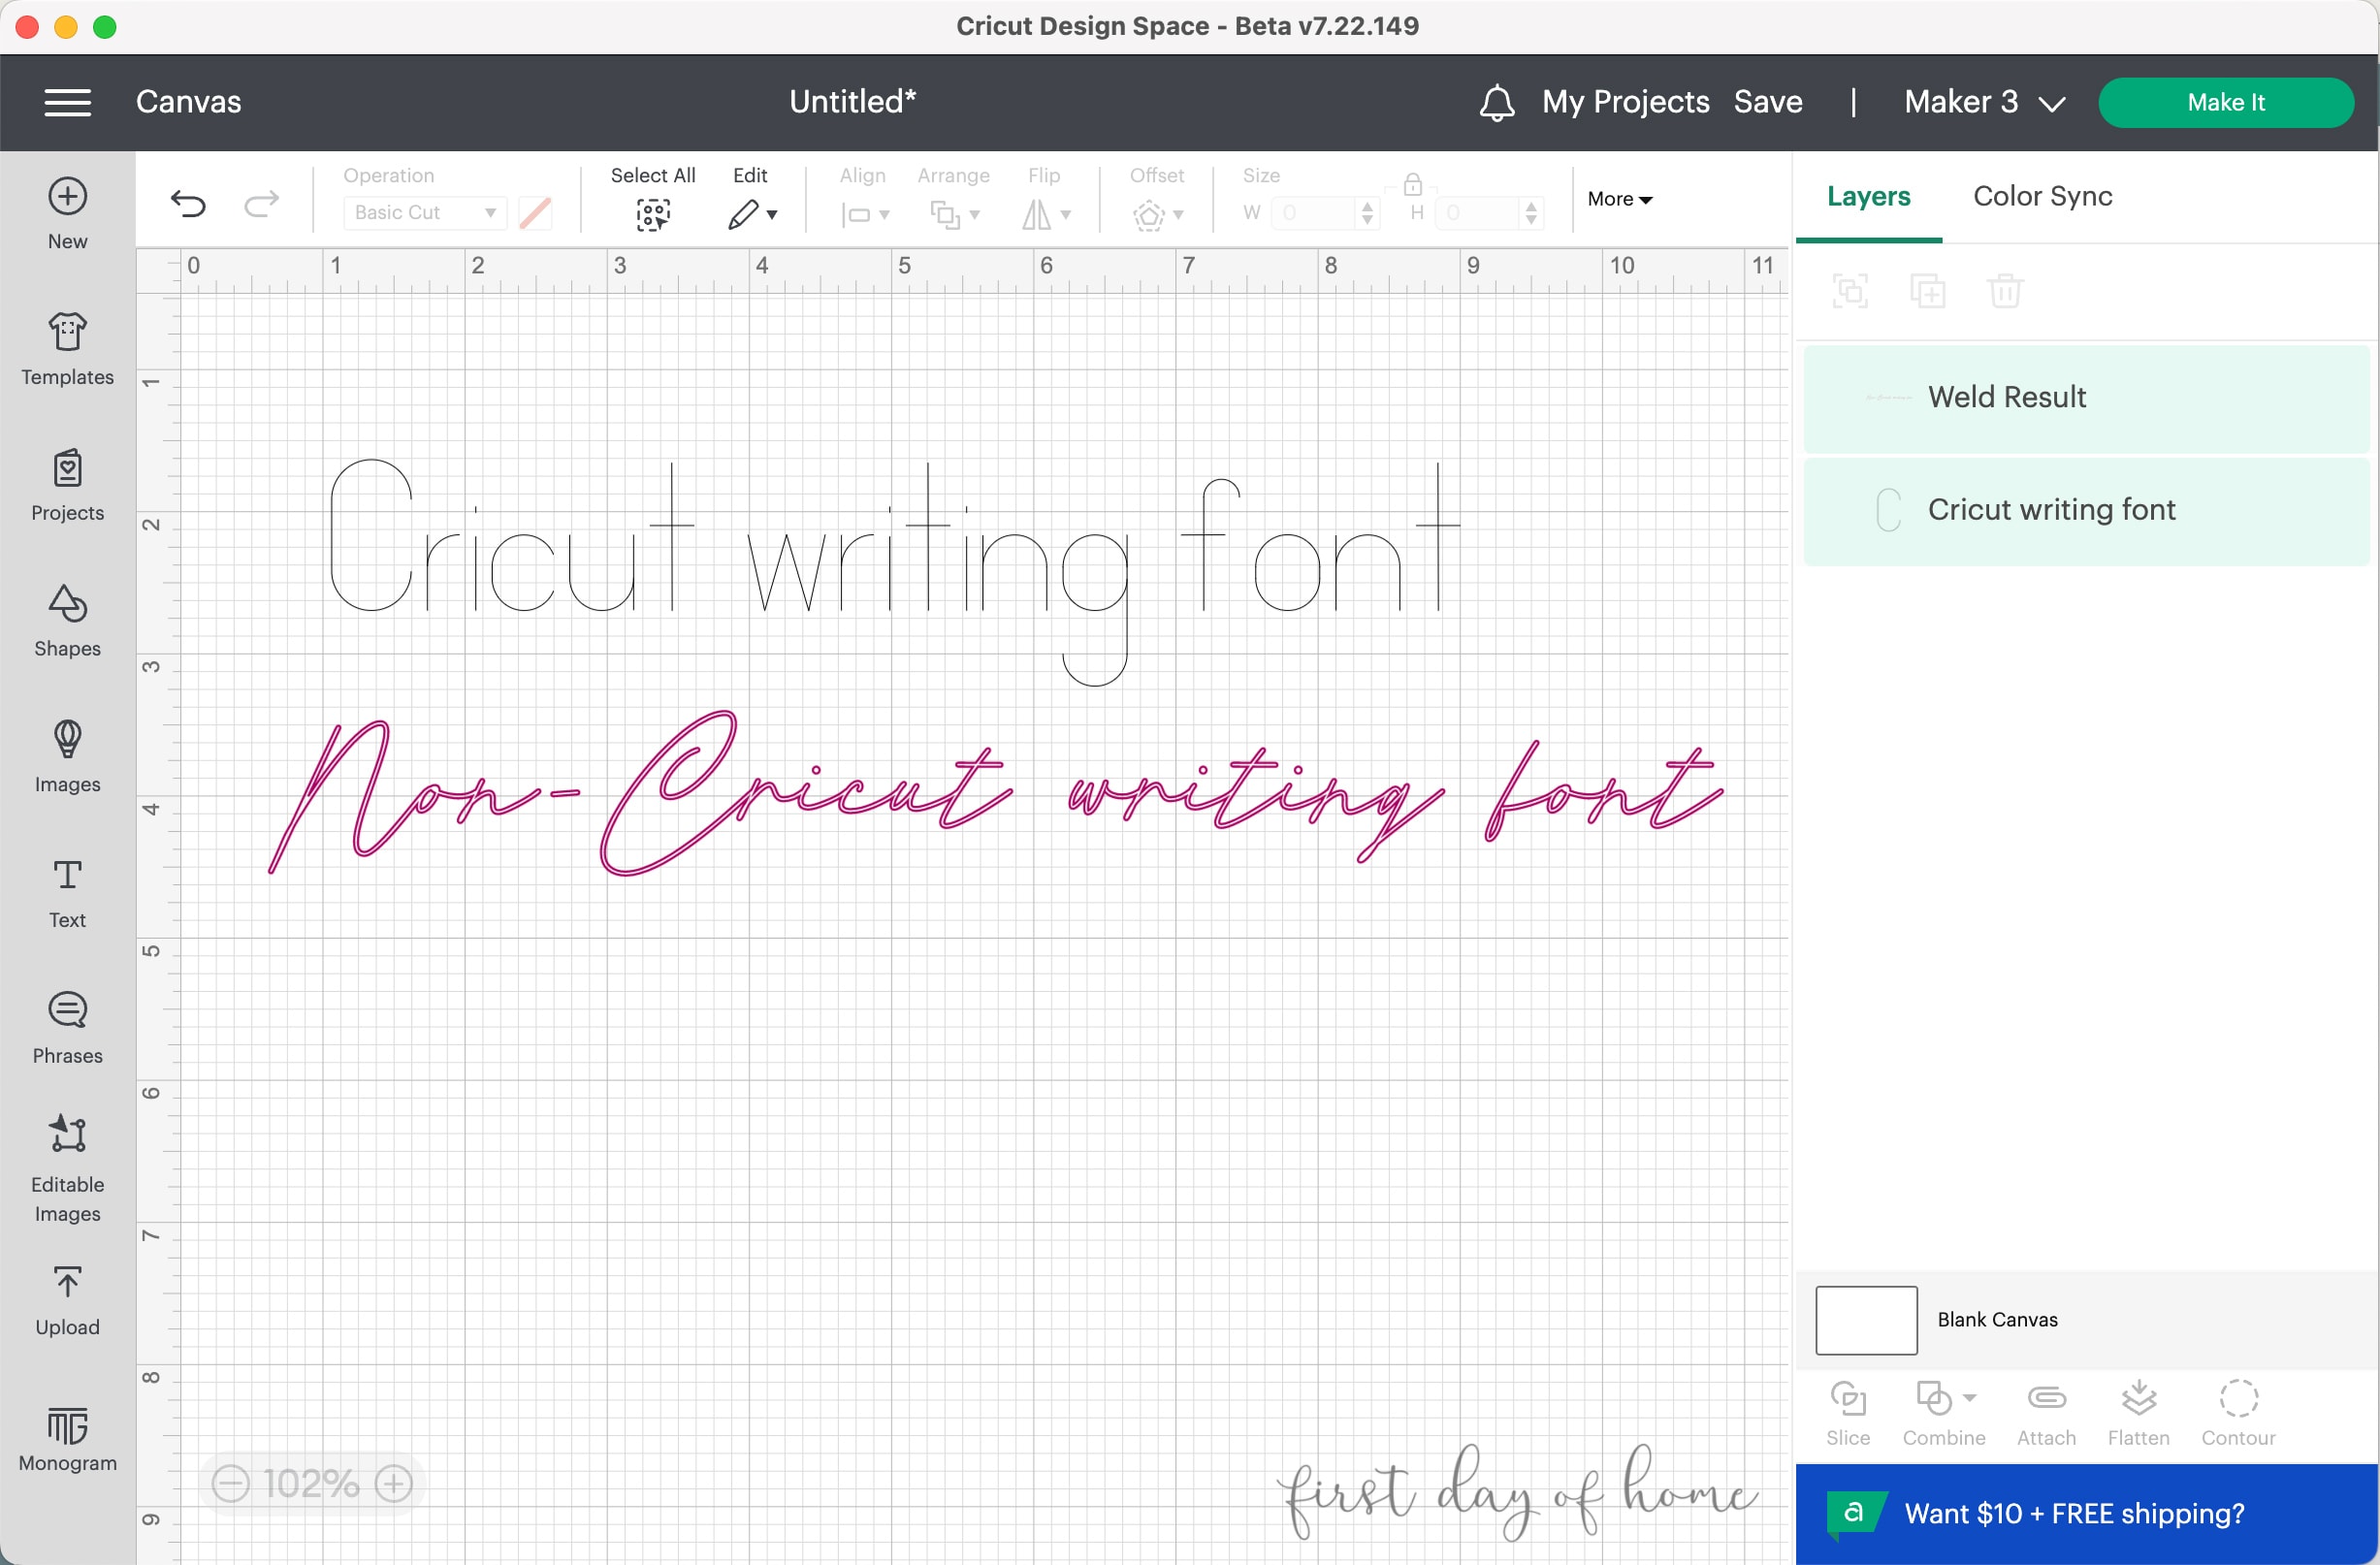 Cricut writing fonts vs non-Cricut writing fonts in Cricut Design Space